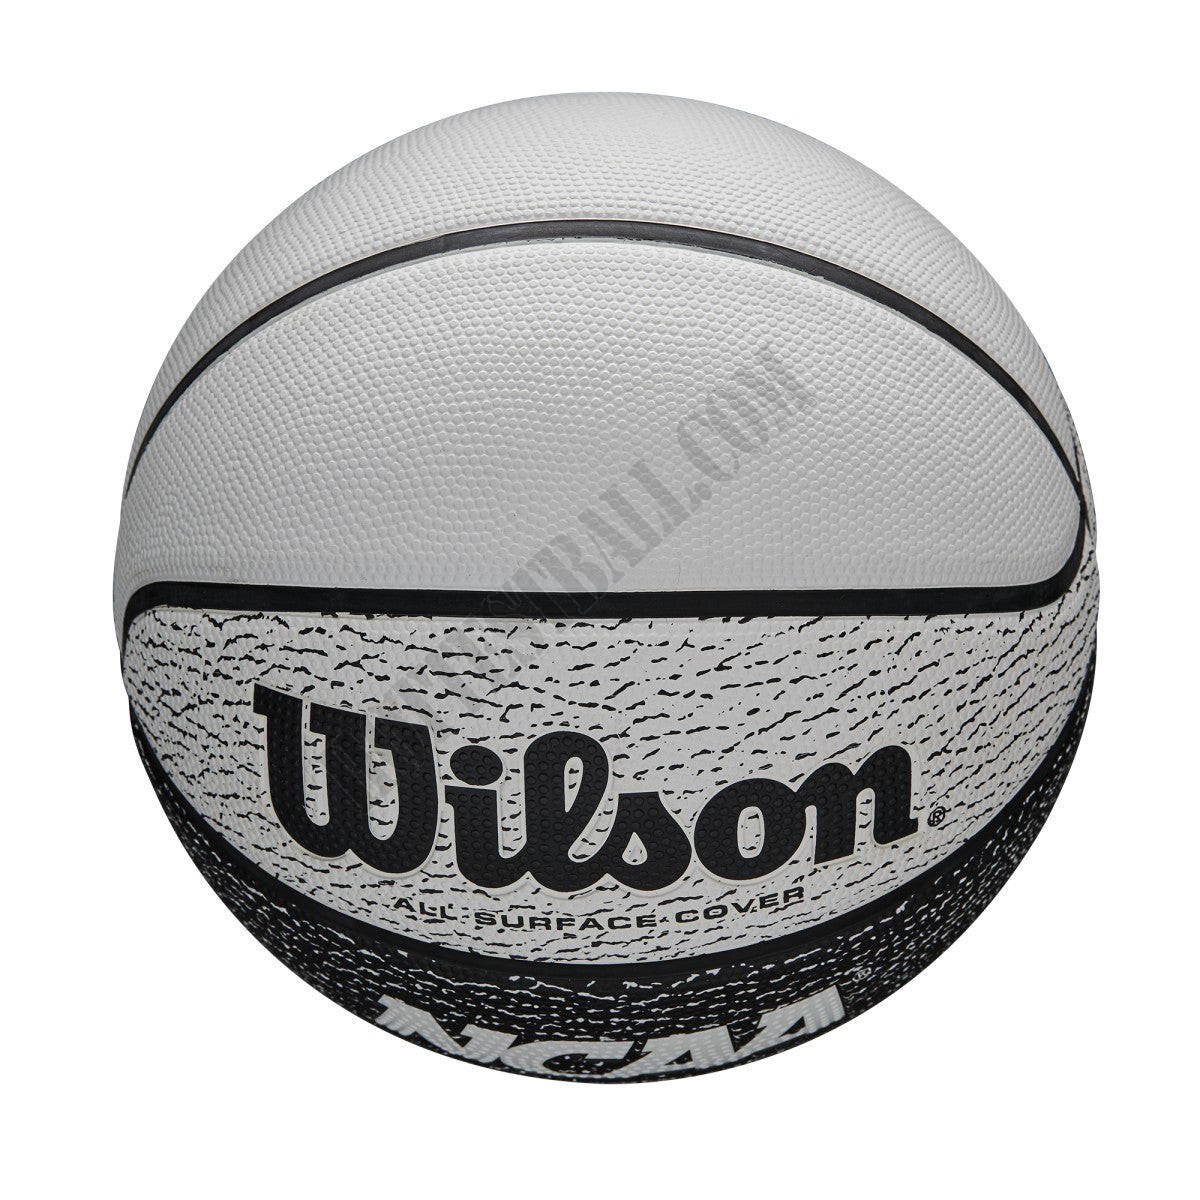 NCAA Hypershot II Basketball - Wilson Discount Store - -4